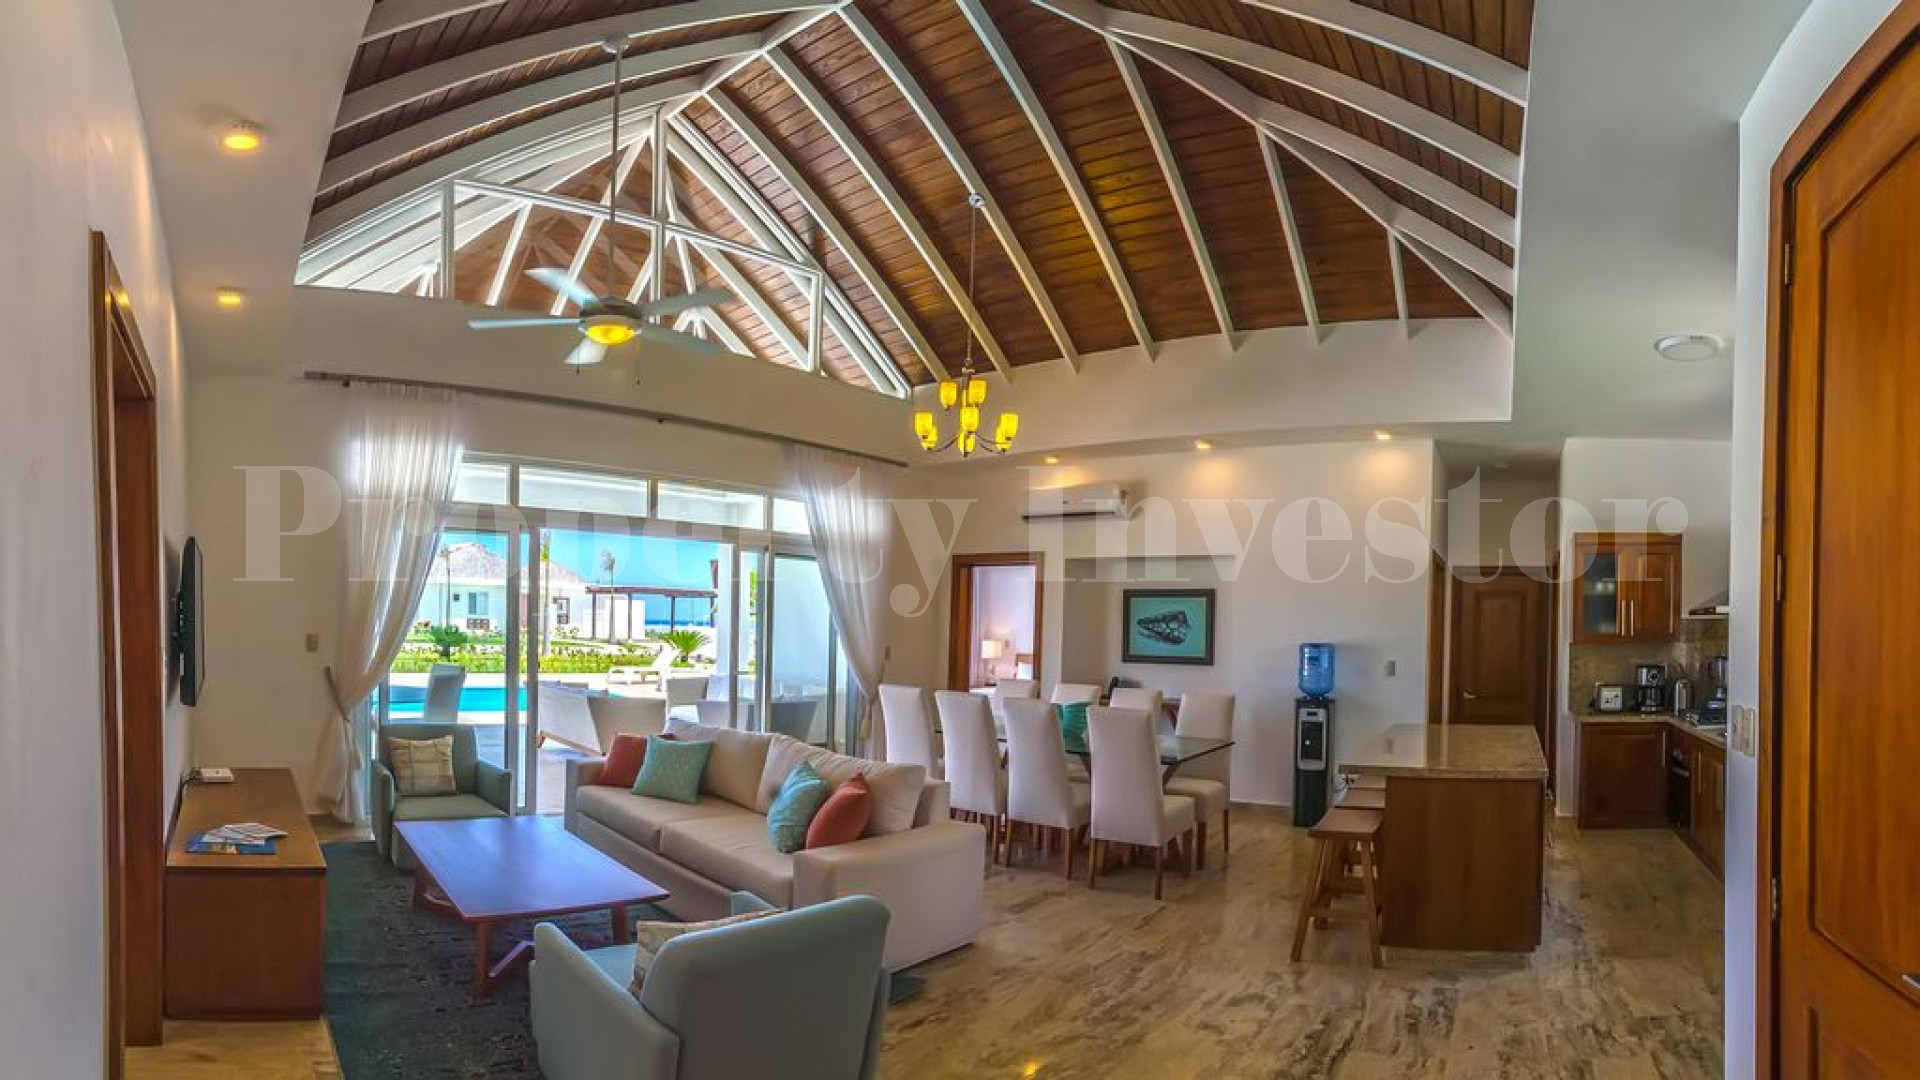 3 Bedroom Oceanview Villa in the Dominican Republic with 30 Year Financing (Villa 21)